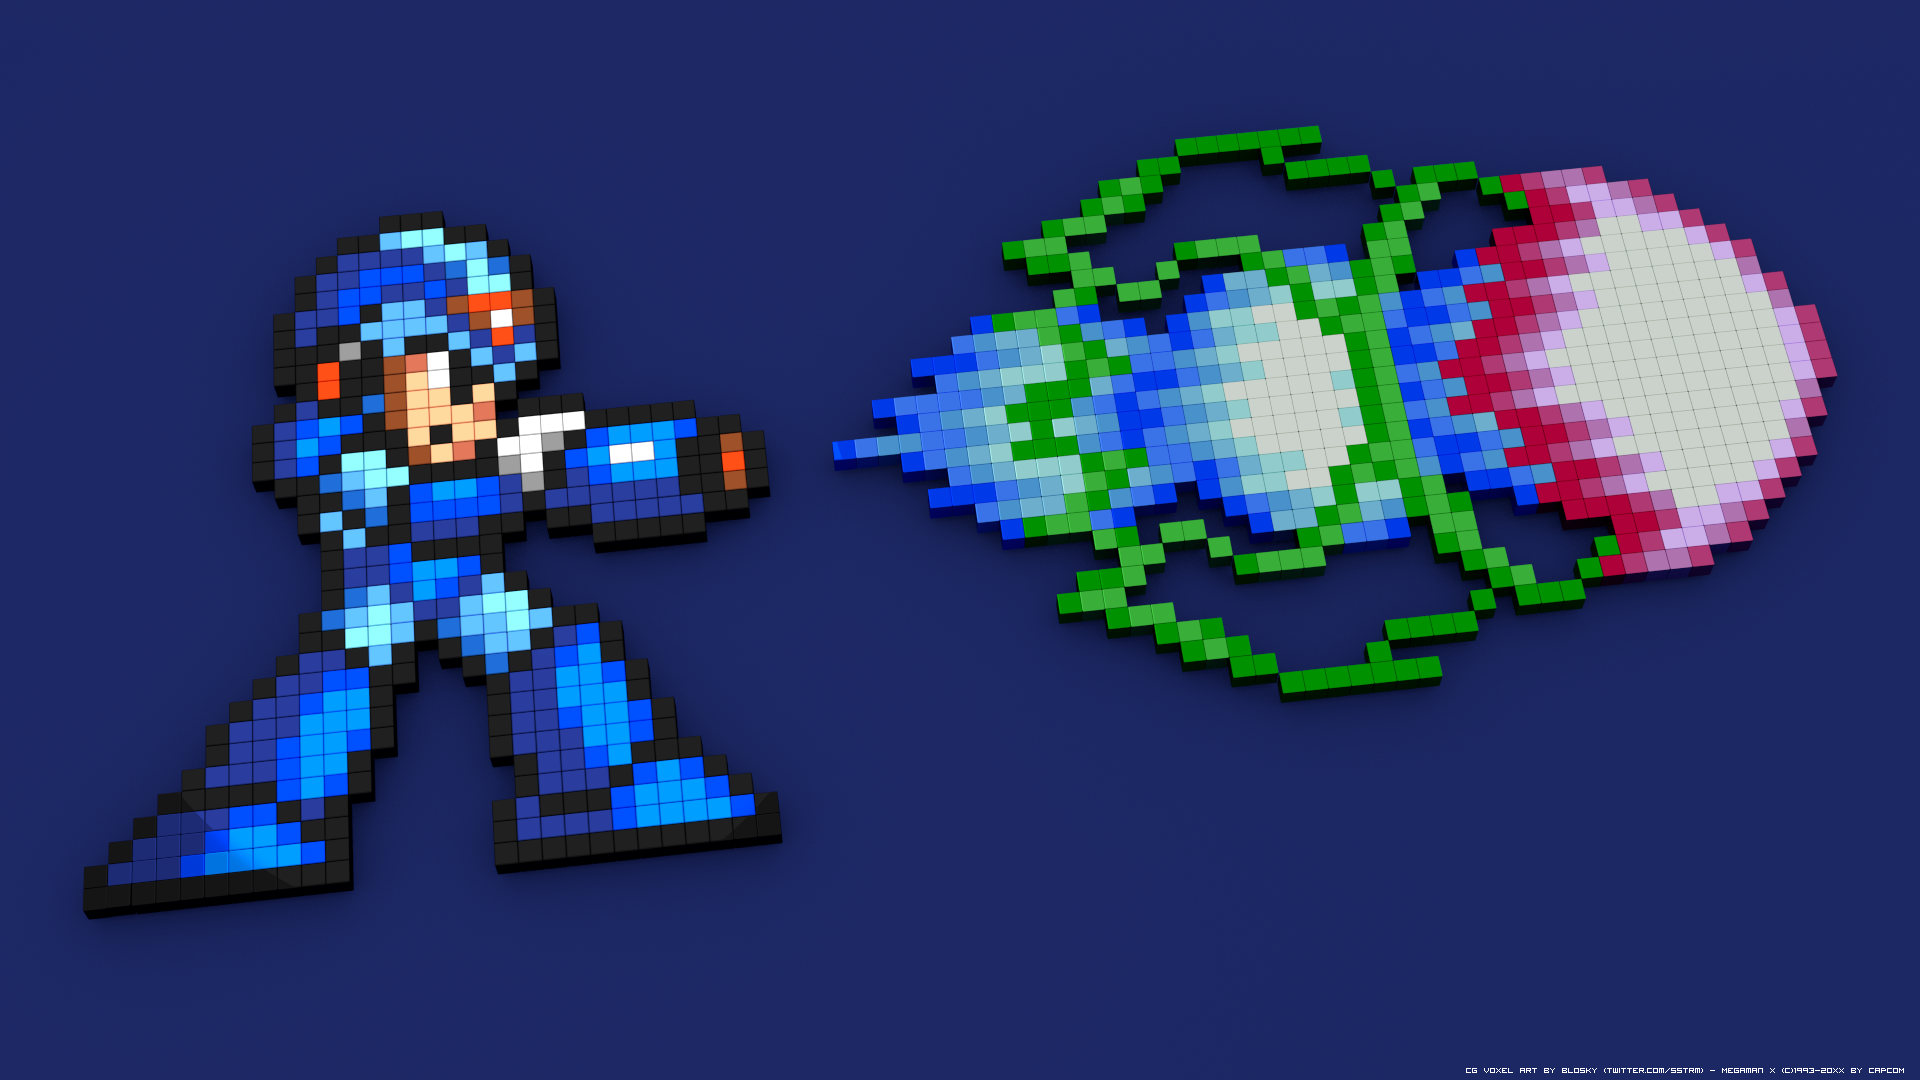 16 Bit 8 Bit Pixelated Pixel Art 3D Blocks 3D Video Games Mega Man Mega Man X 1920x1080